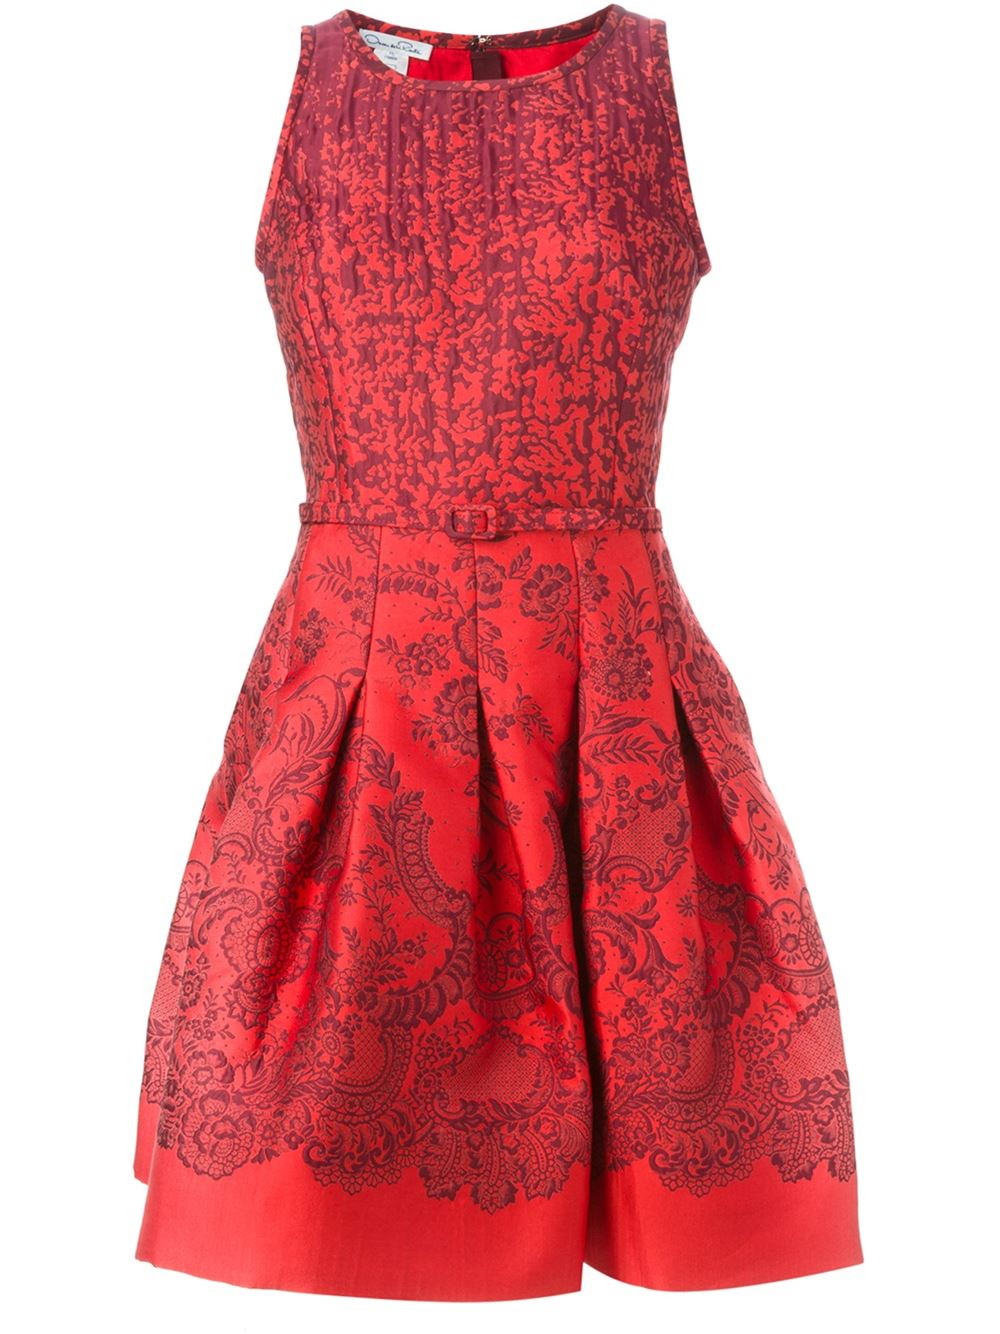 Oscar de la renta Floral Jacquard Dress in Red